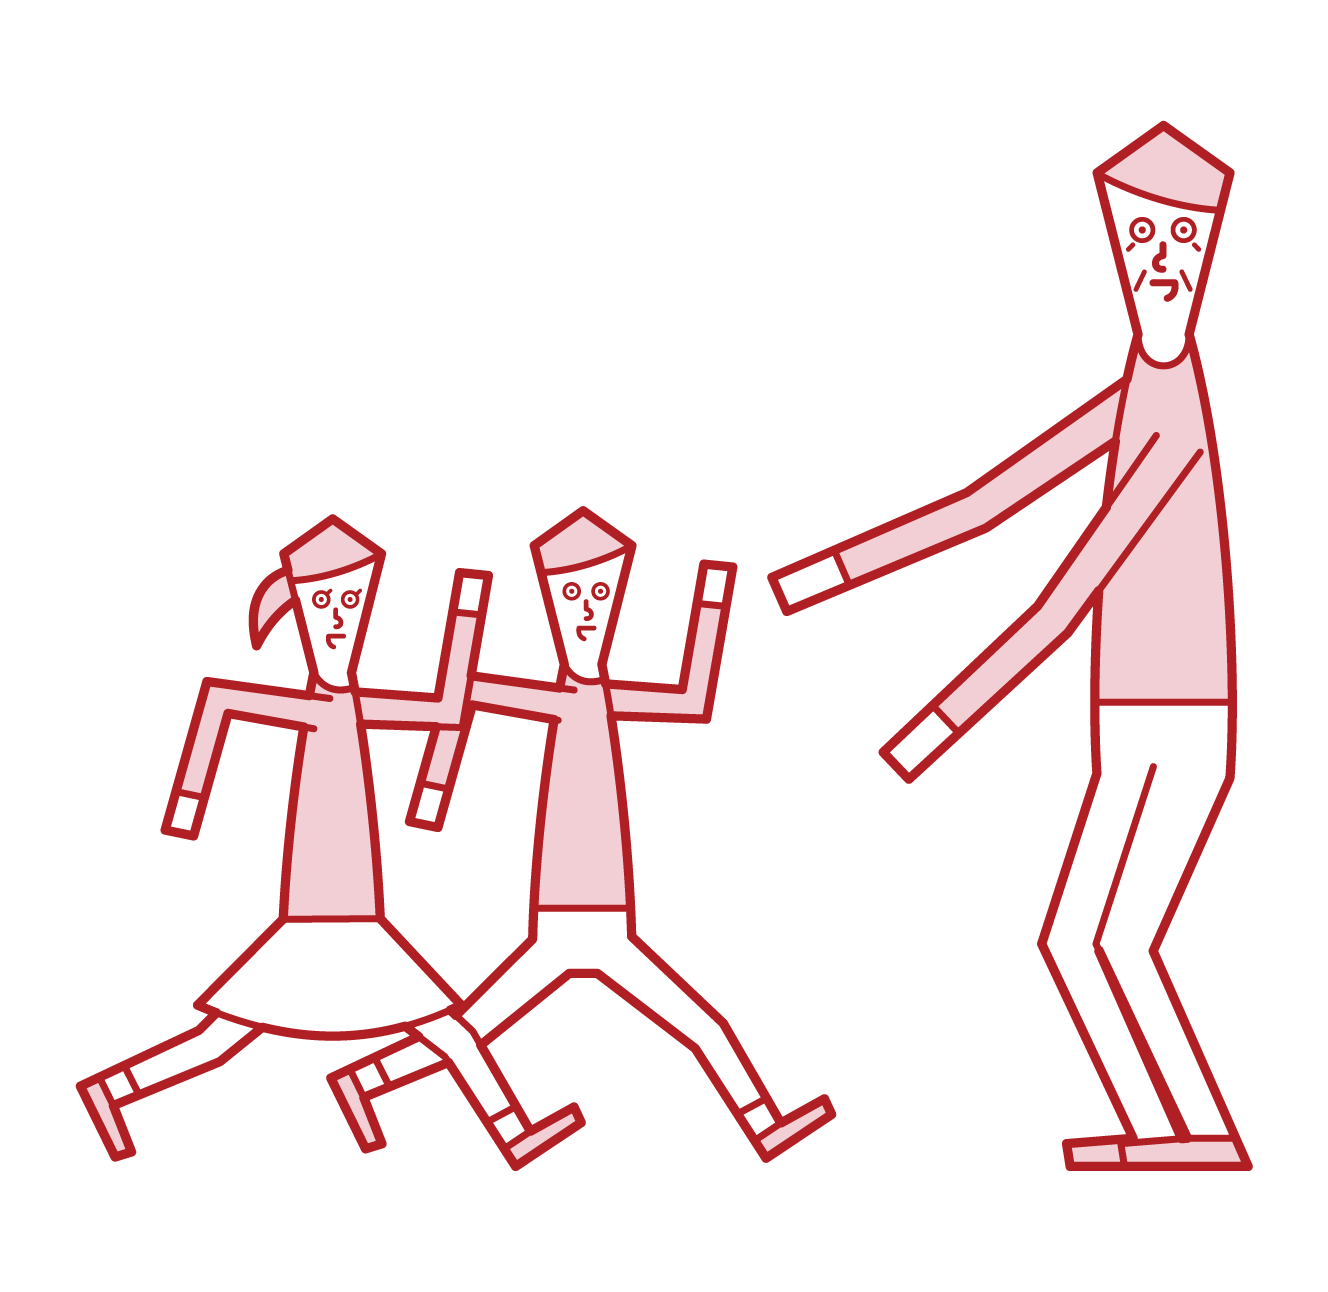 Illustration of an old man (man) greeting children